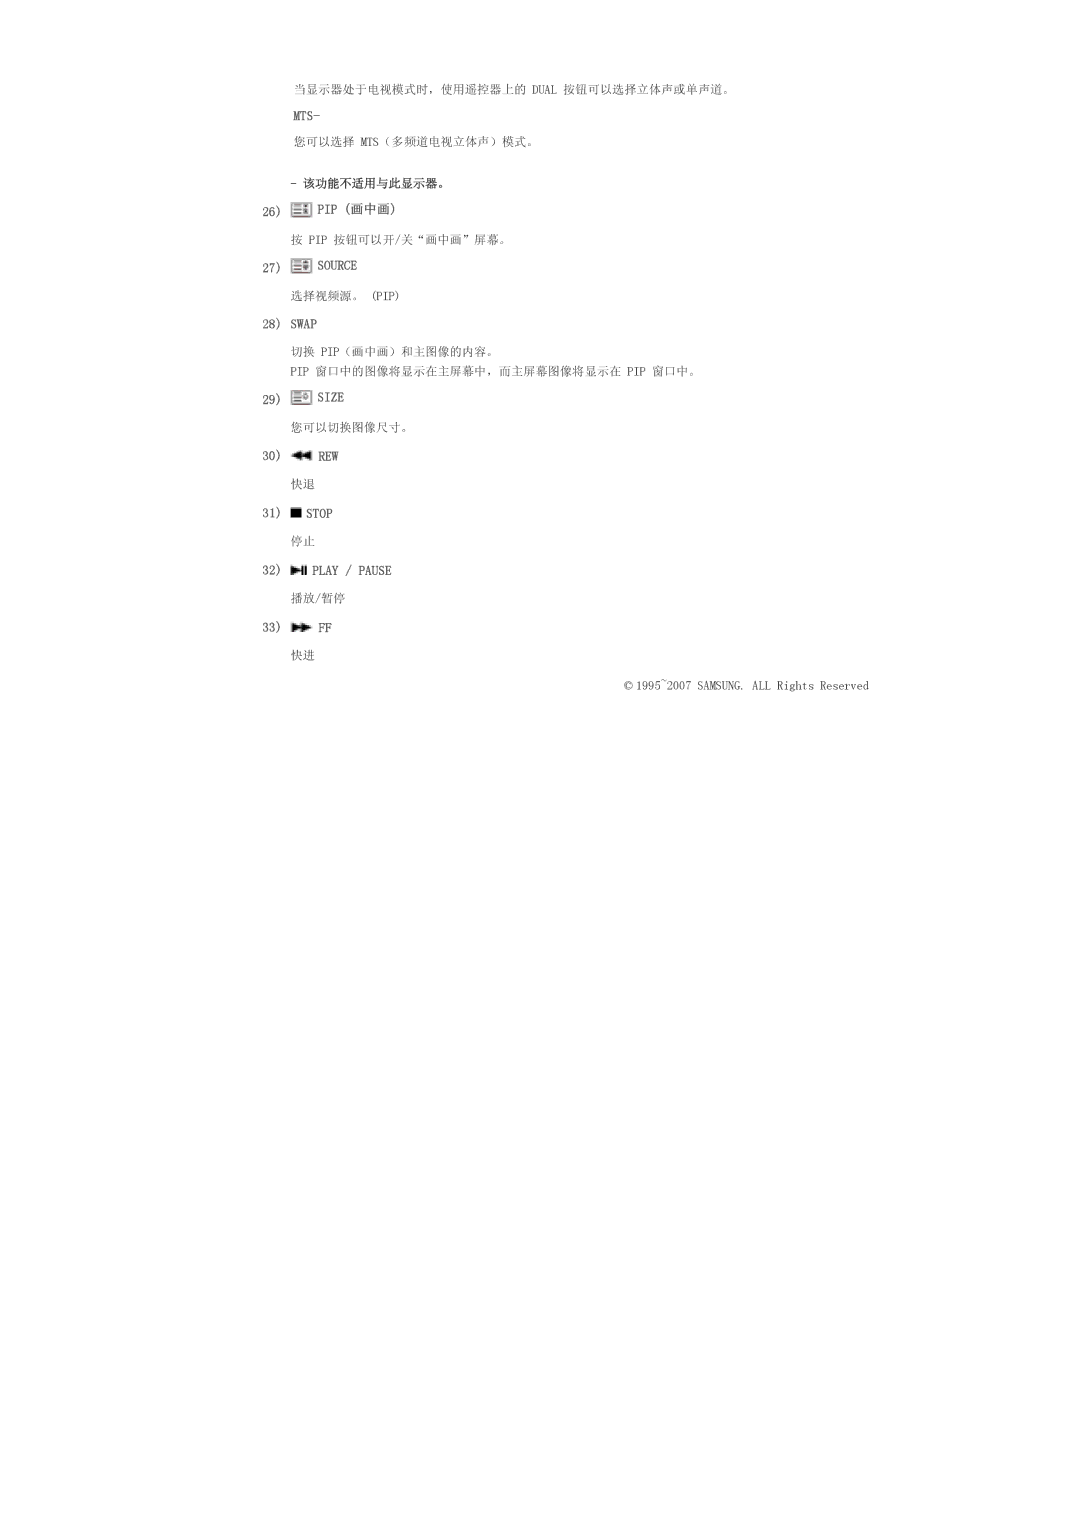 Samsung LS57BPTNS/EDC, LS57BPTNB/EDC manual Pip 画中画, Swap, Size, REW Stop, 33 FF 